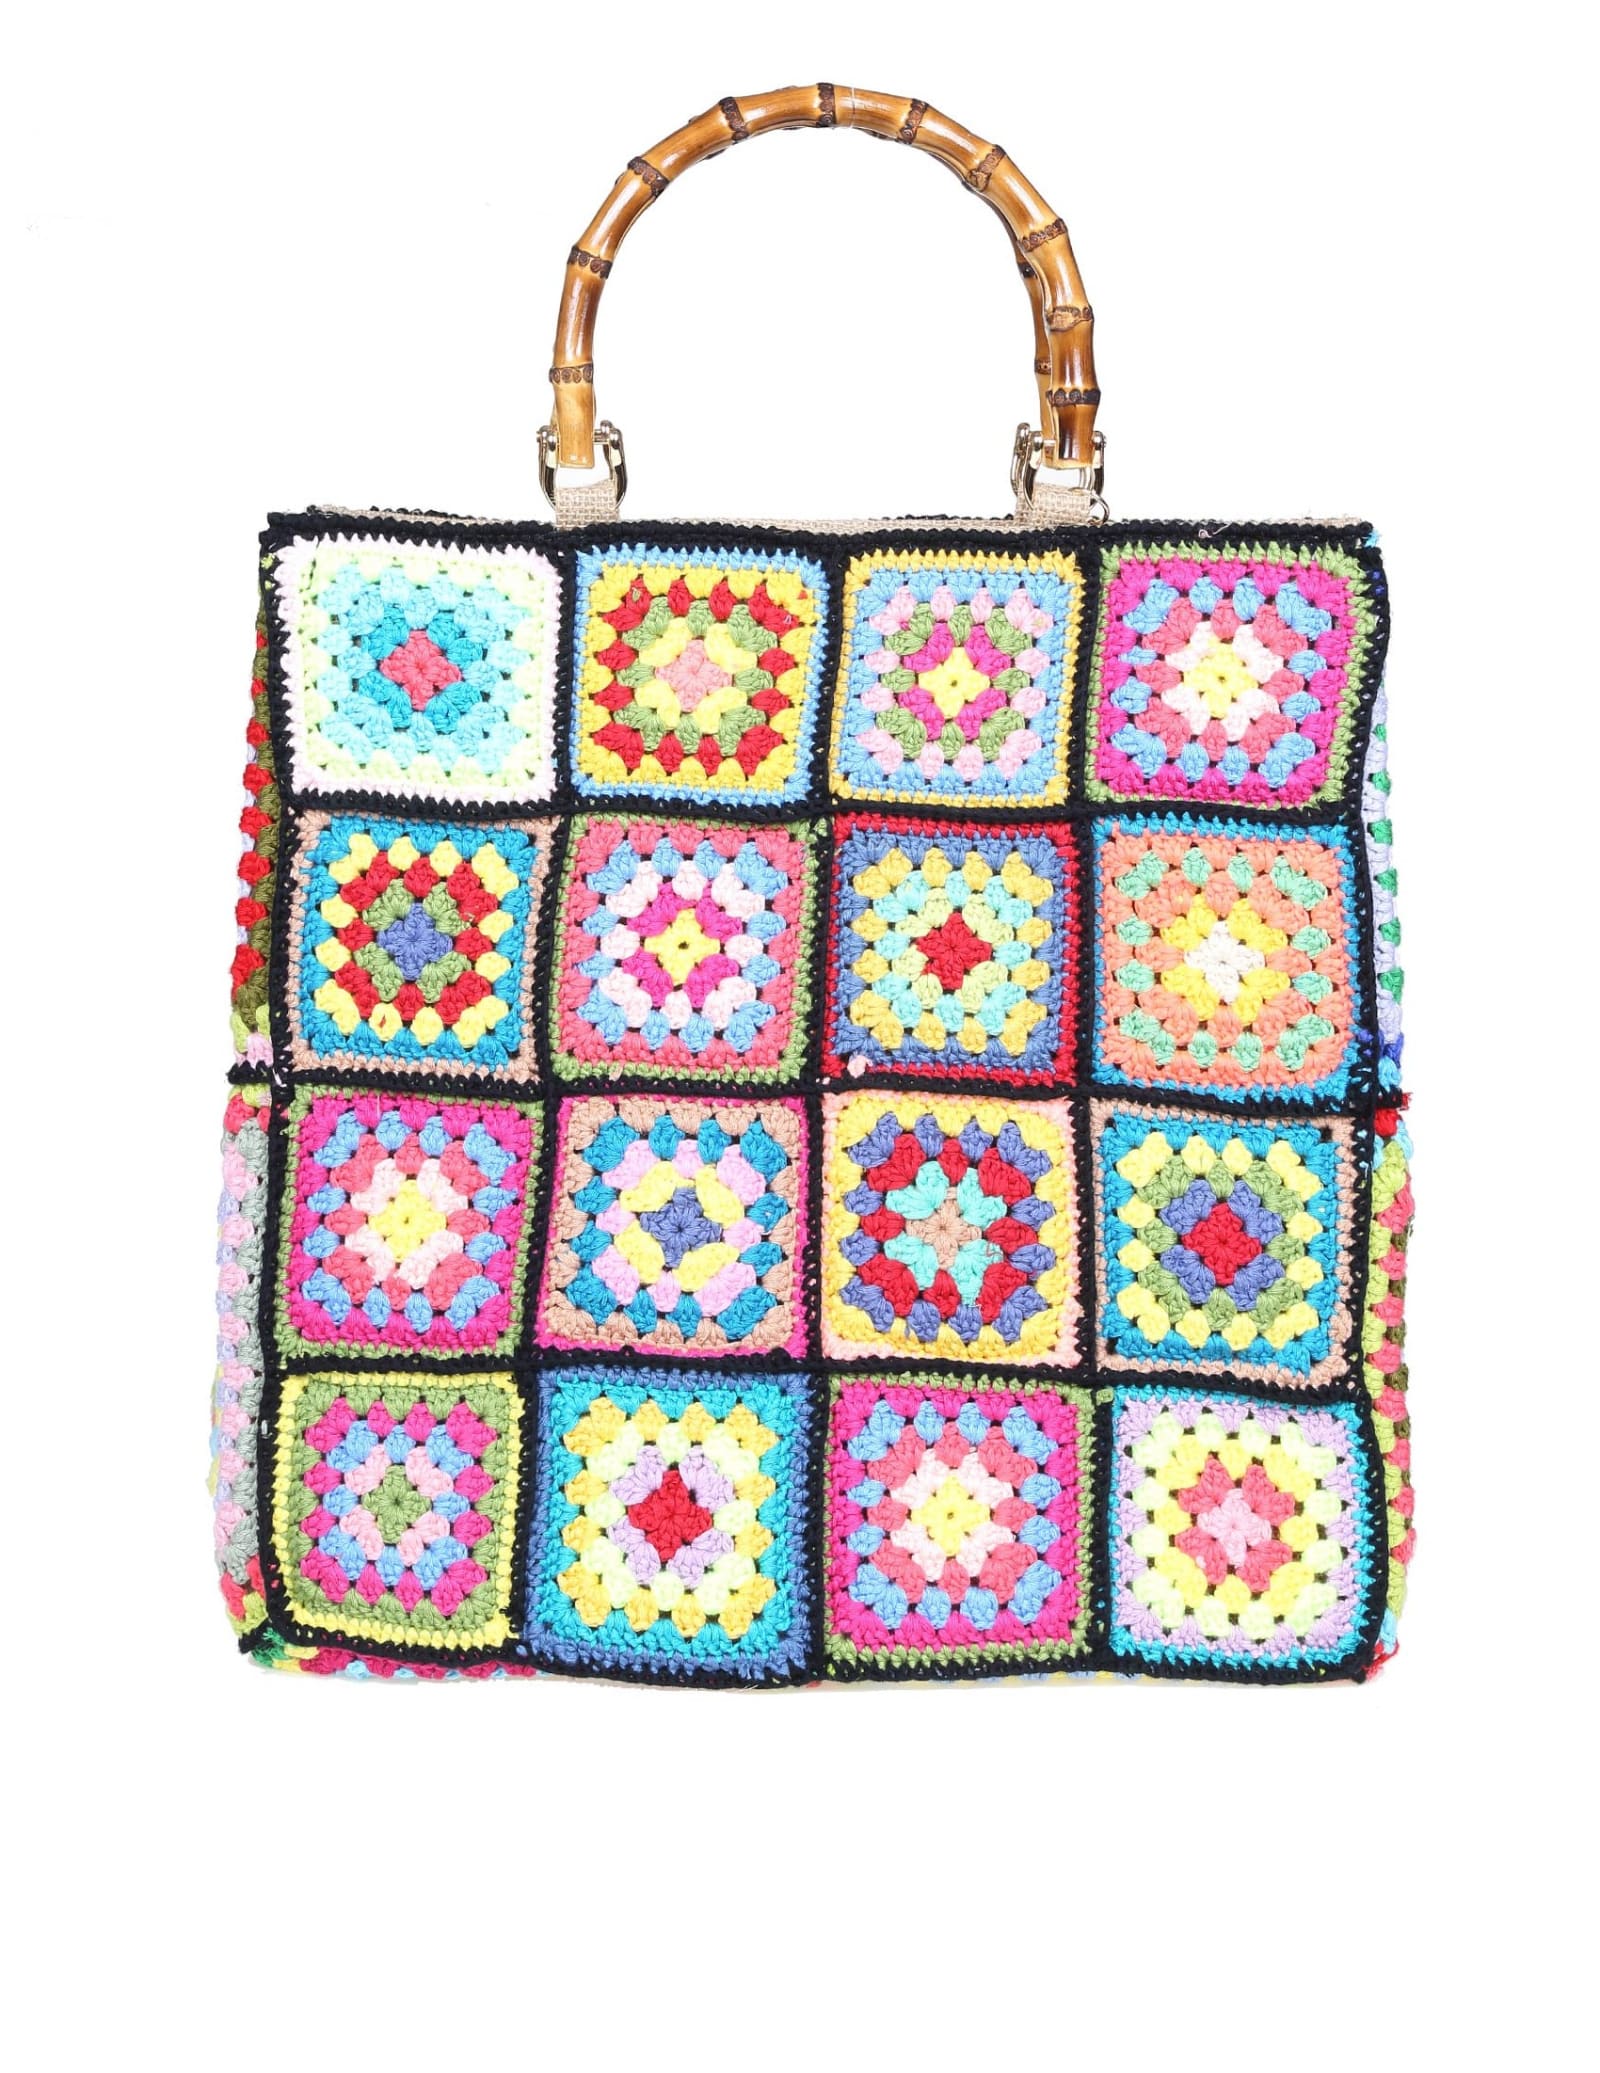 LaMilanesa The Milanesa Tote Bag Xc1 In Crochet